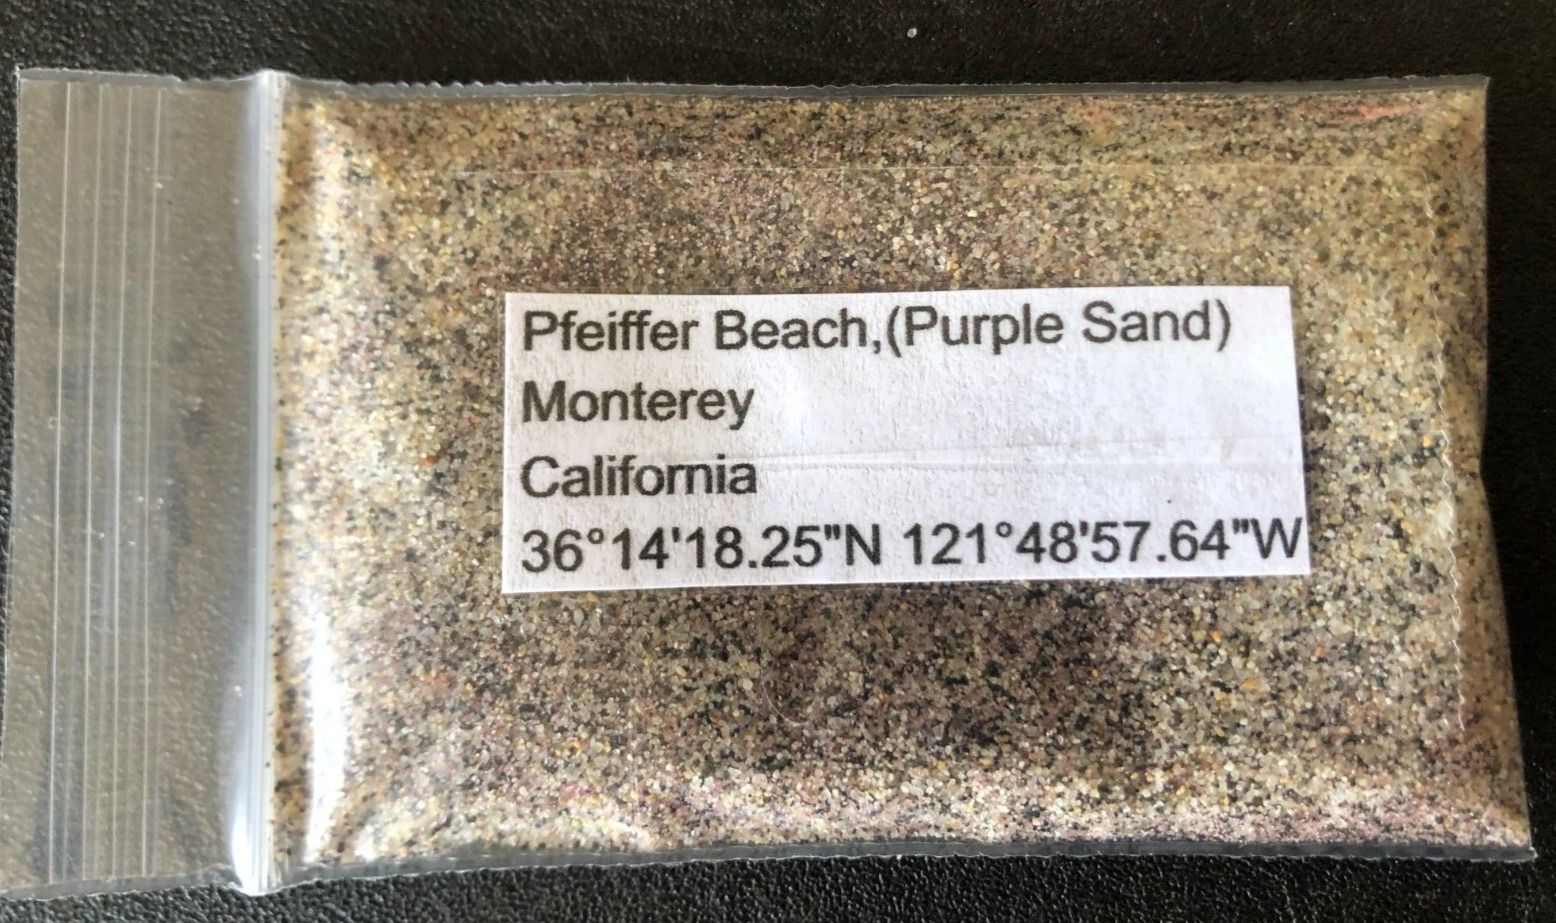 California Pfeiffer Beach (Purple Sand) Monterey Sand Sample 